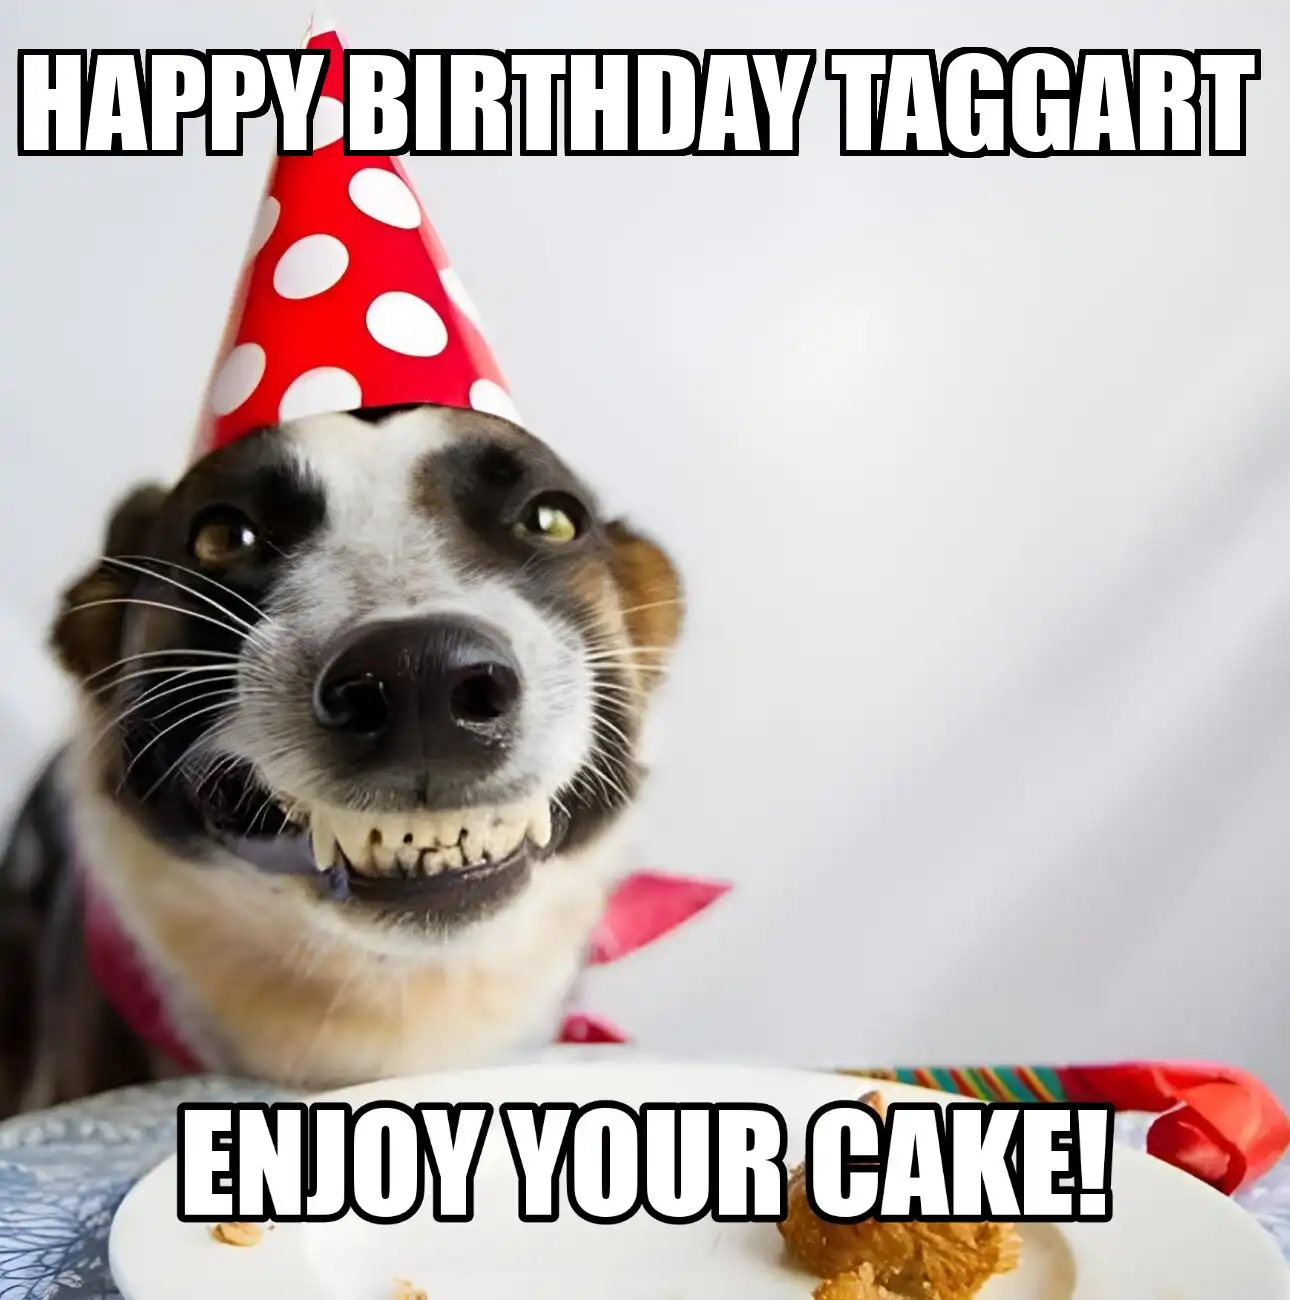 Happy Birthday Taggart Enjoy Your Cake Dog Meme